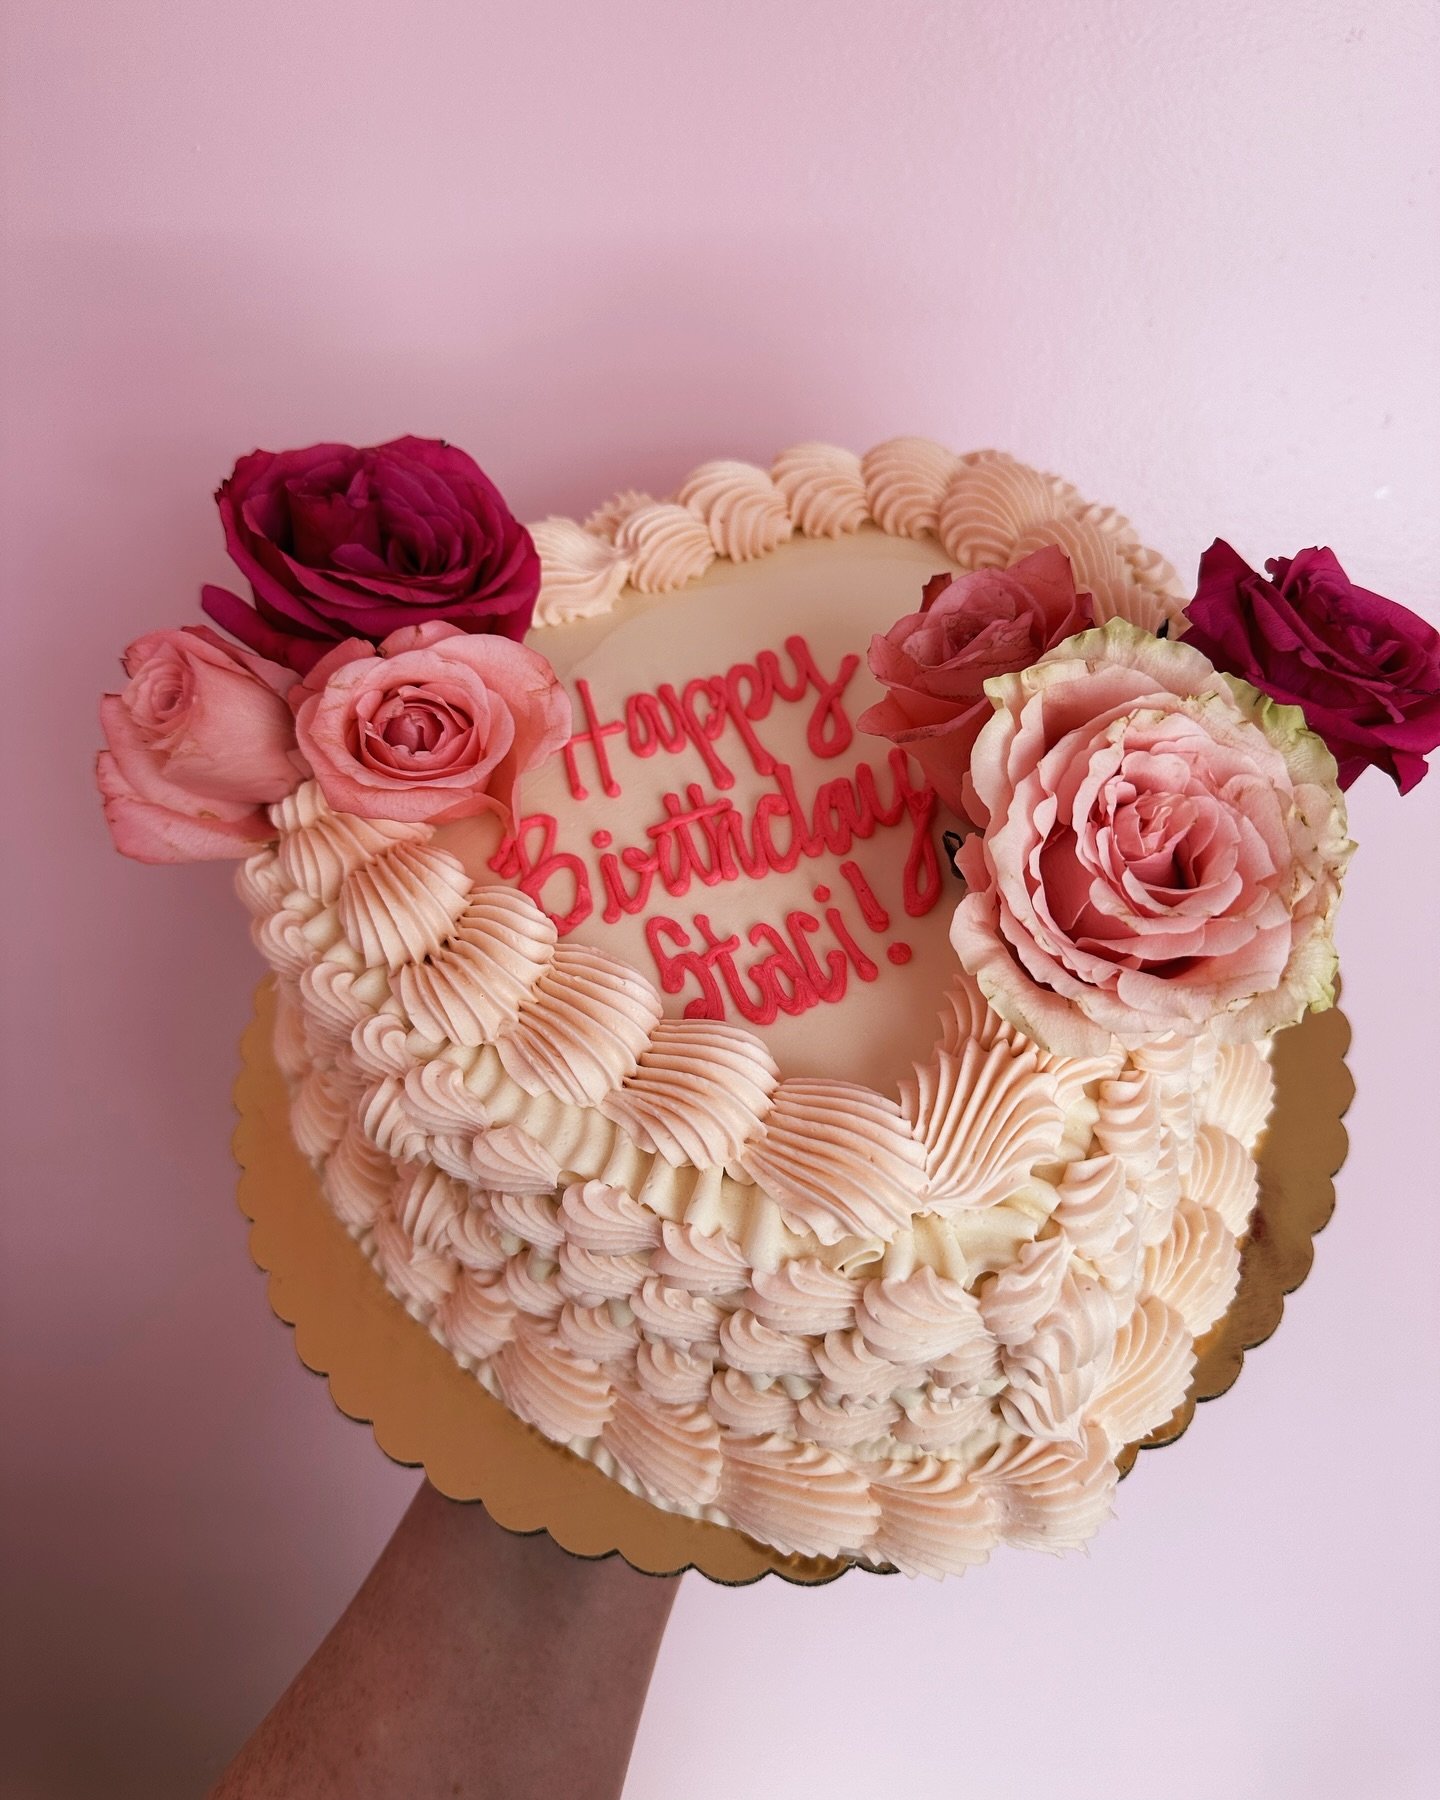 Soft pink and white vintage cake with florals 🩷🍰🌸
&bull;
&bull;
&bull;
&bull;
#cake #cakedecorating #cakedesign #cakedecorator #cakecakecake #nashville #nashvillecakes #cakestyle #franklintn #vintagecakes #franklincakes